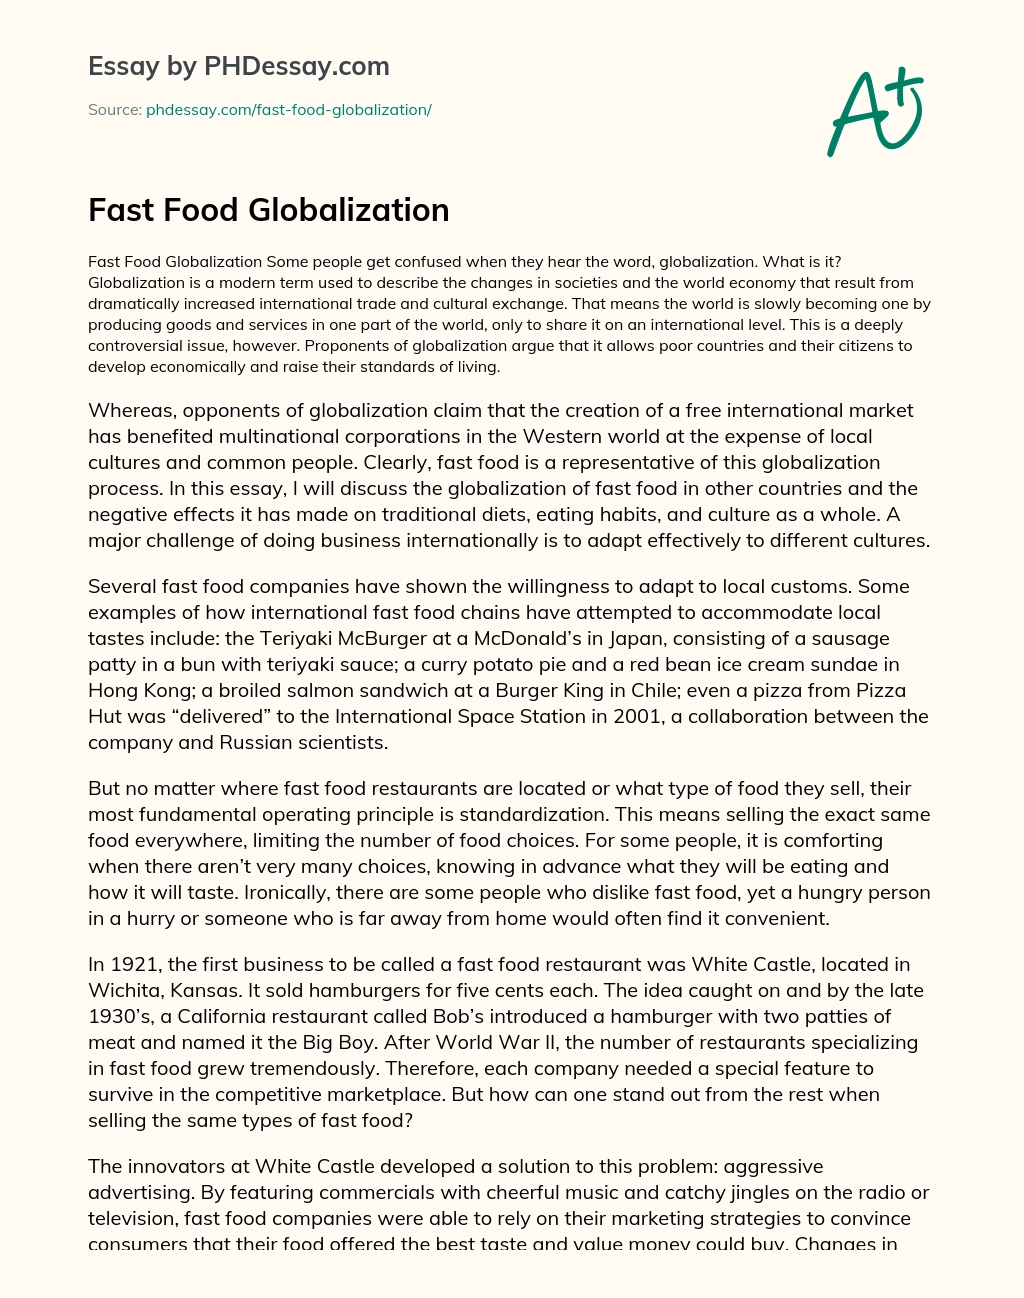 Fast Food Globalization essay